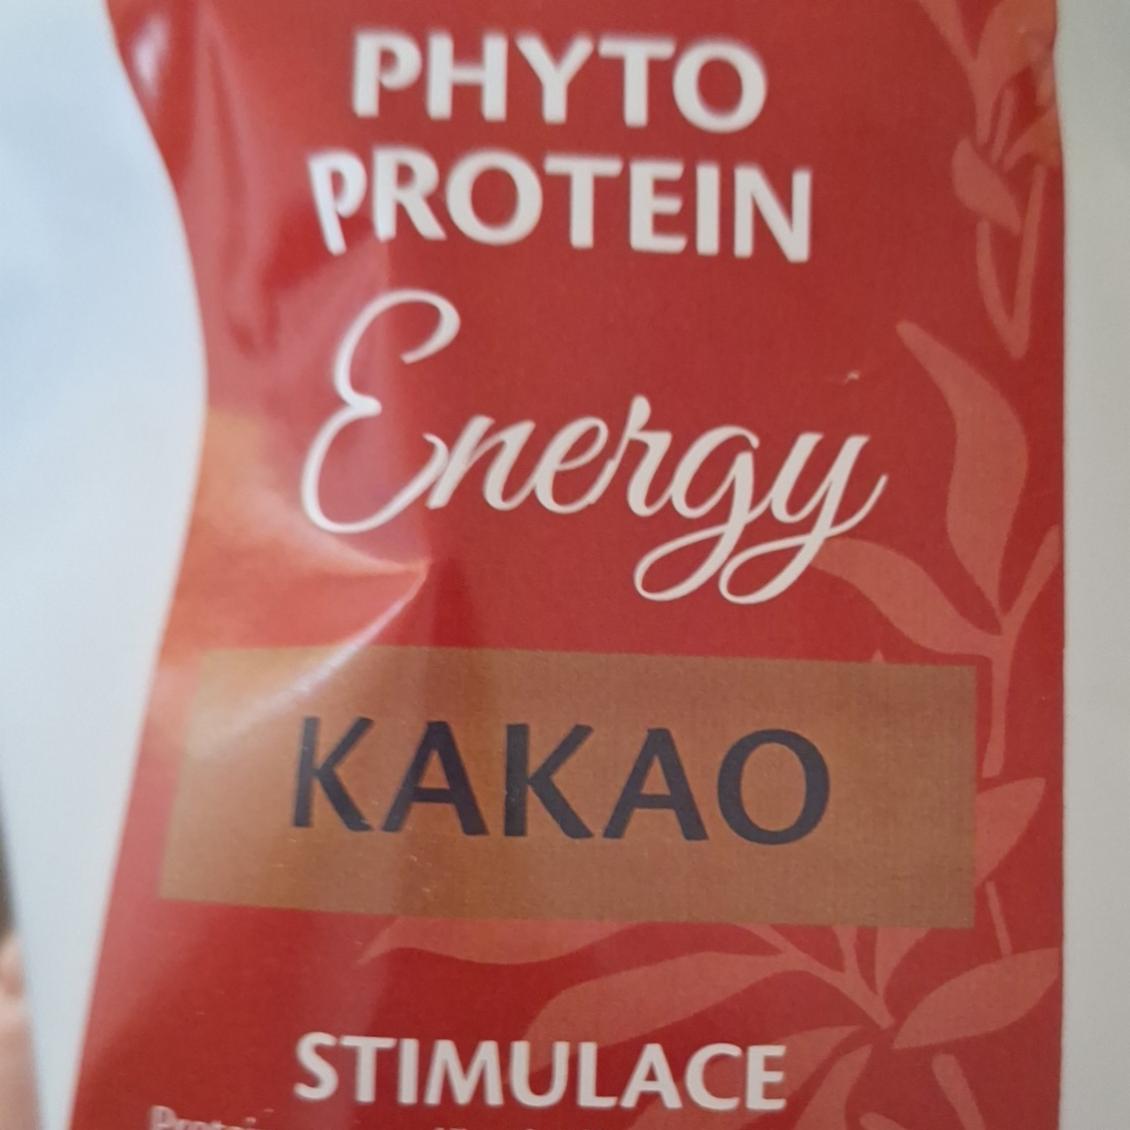 Fotografie - Phyto protein energy kakao Salvia Paradise